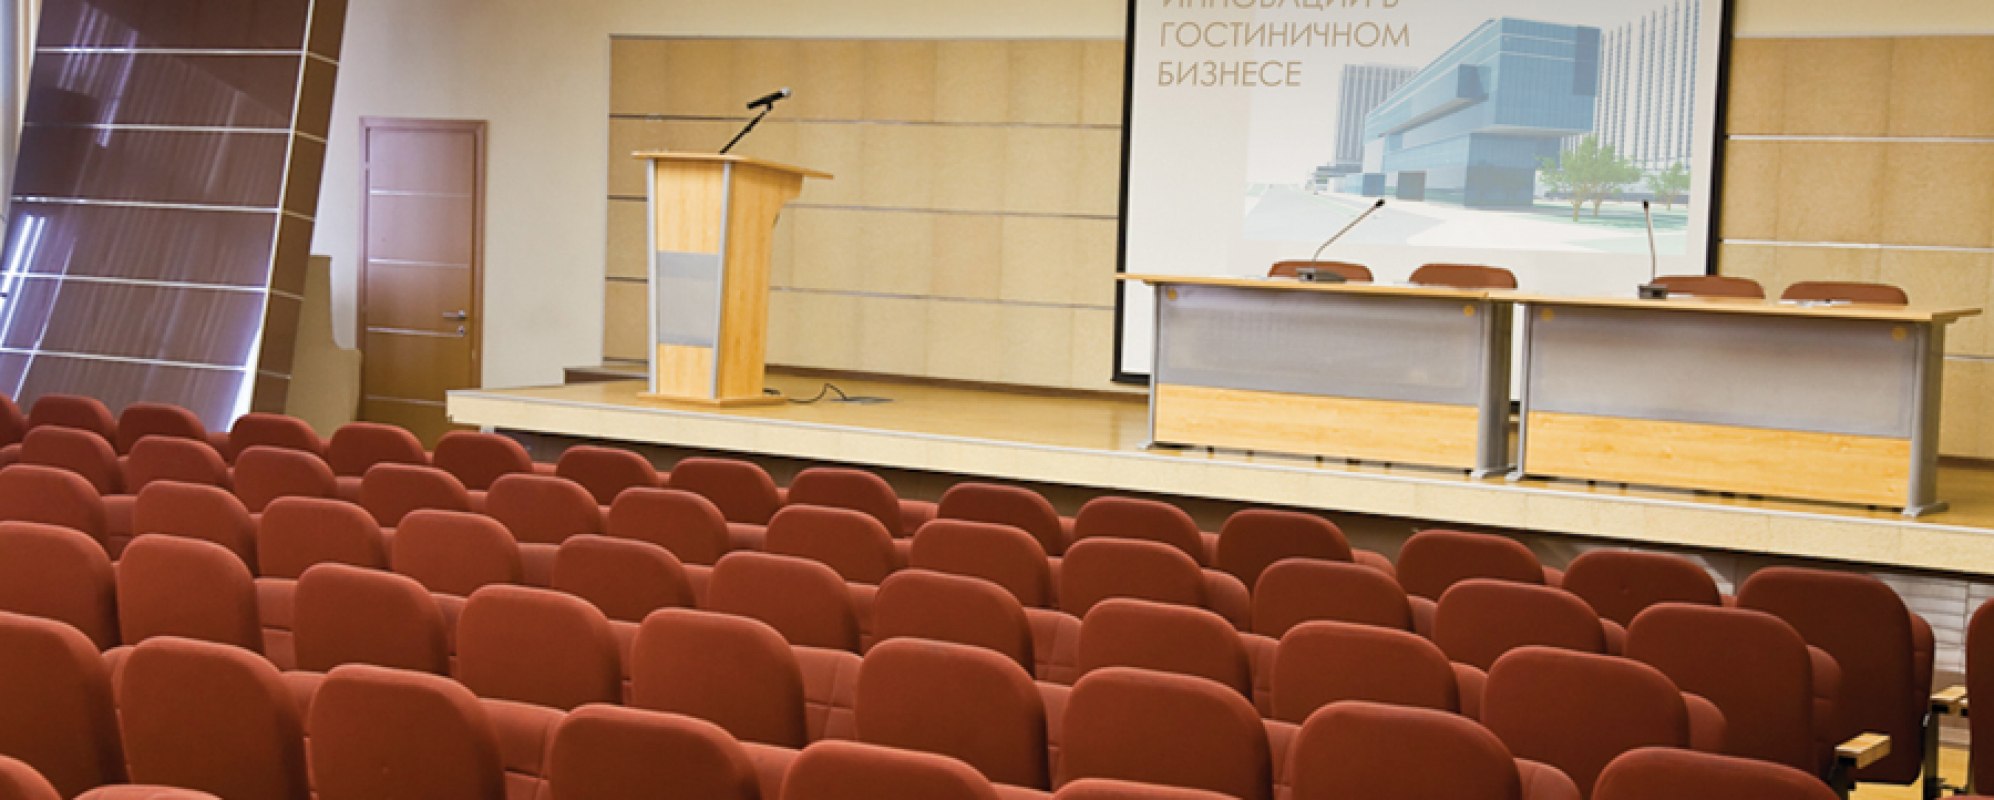 Фотографии конференц-зала Москва 1